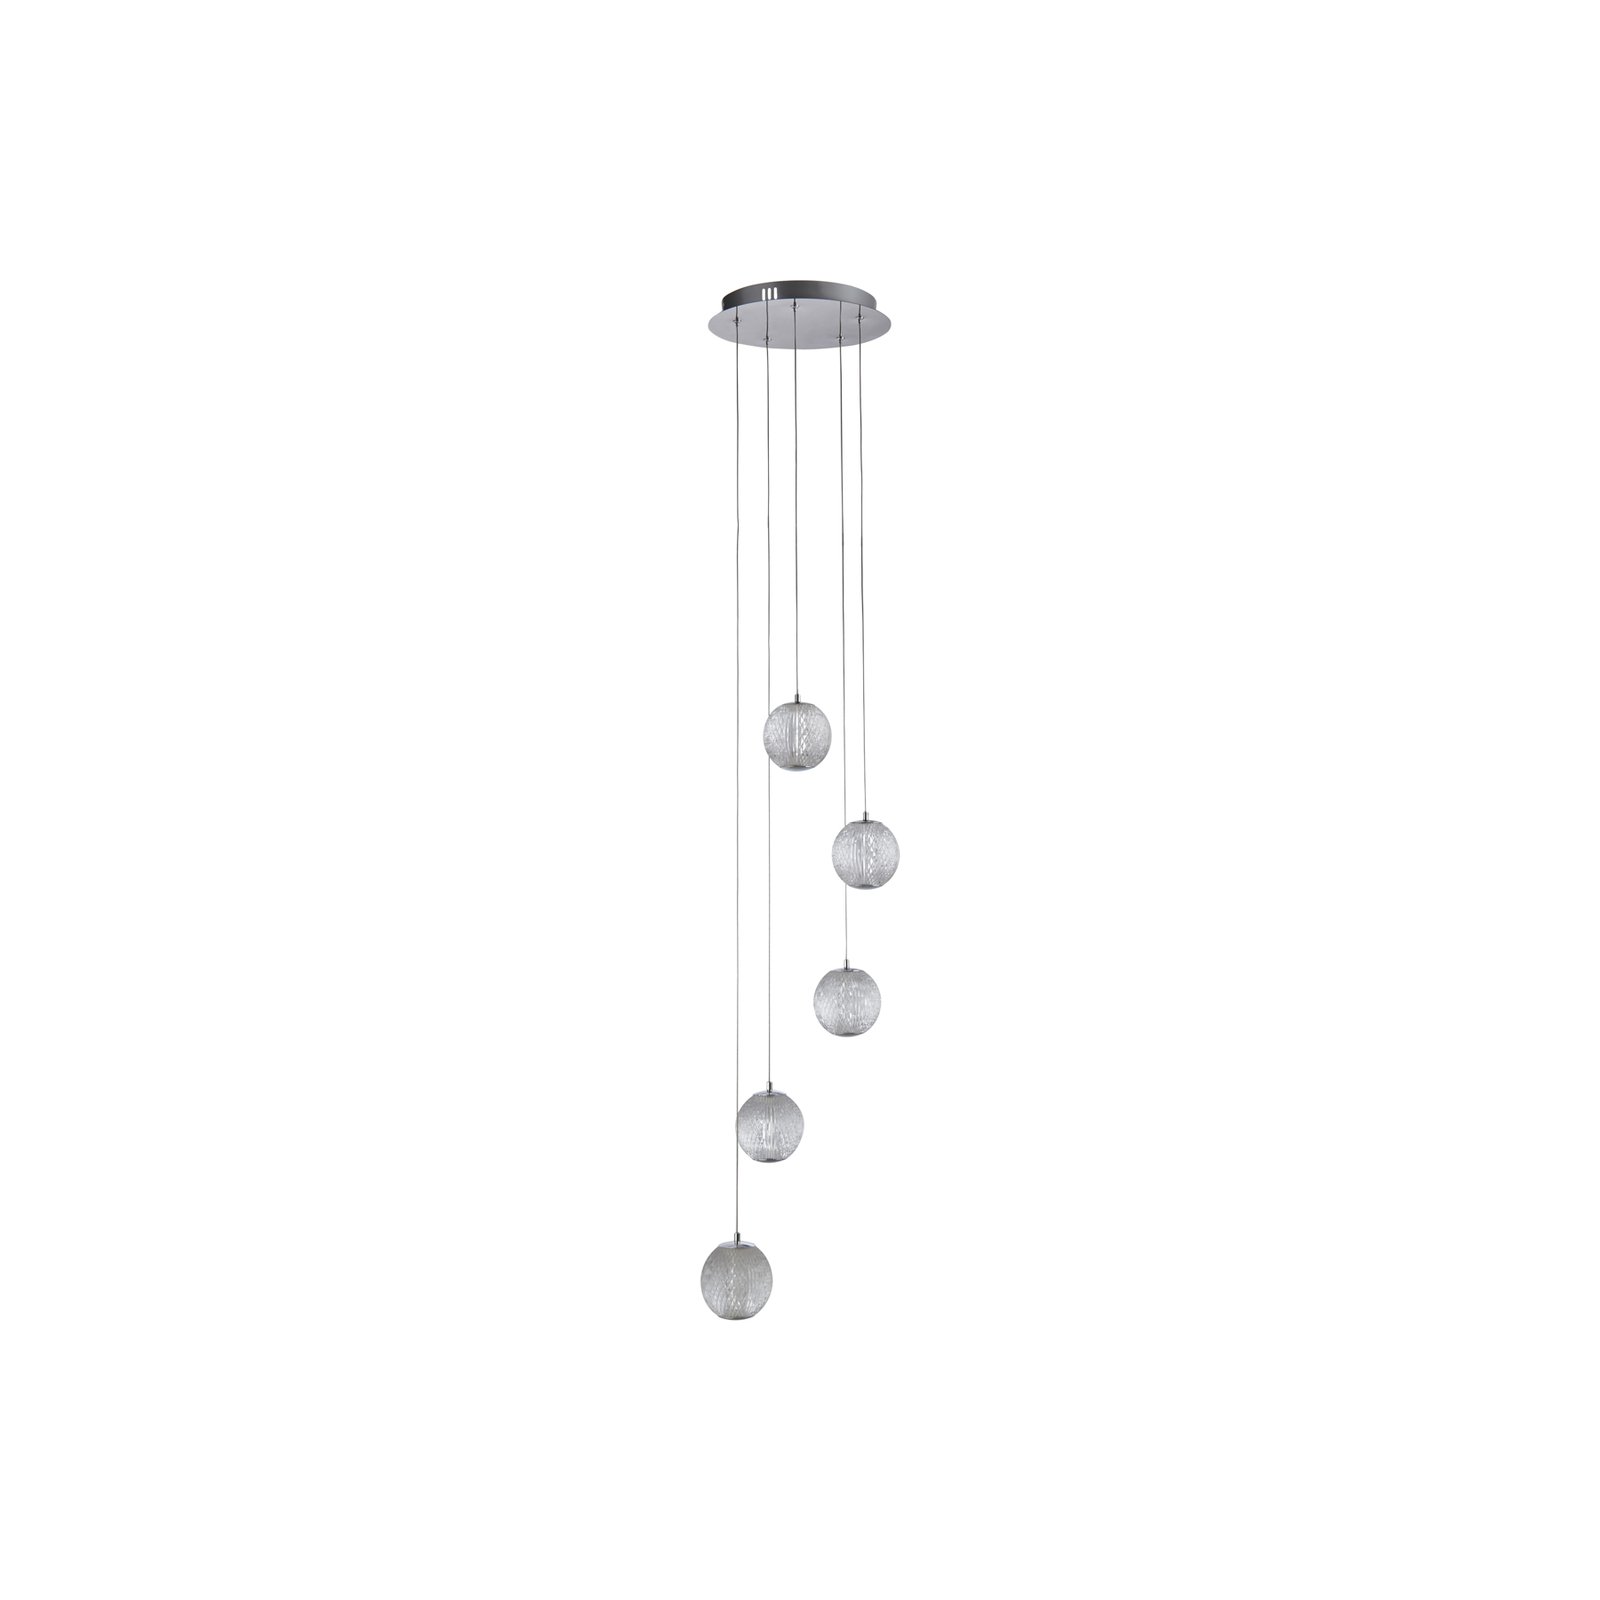 LED pendant light Allure, round, 5-bulb